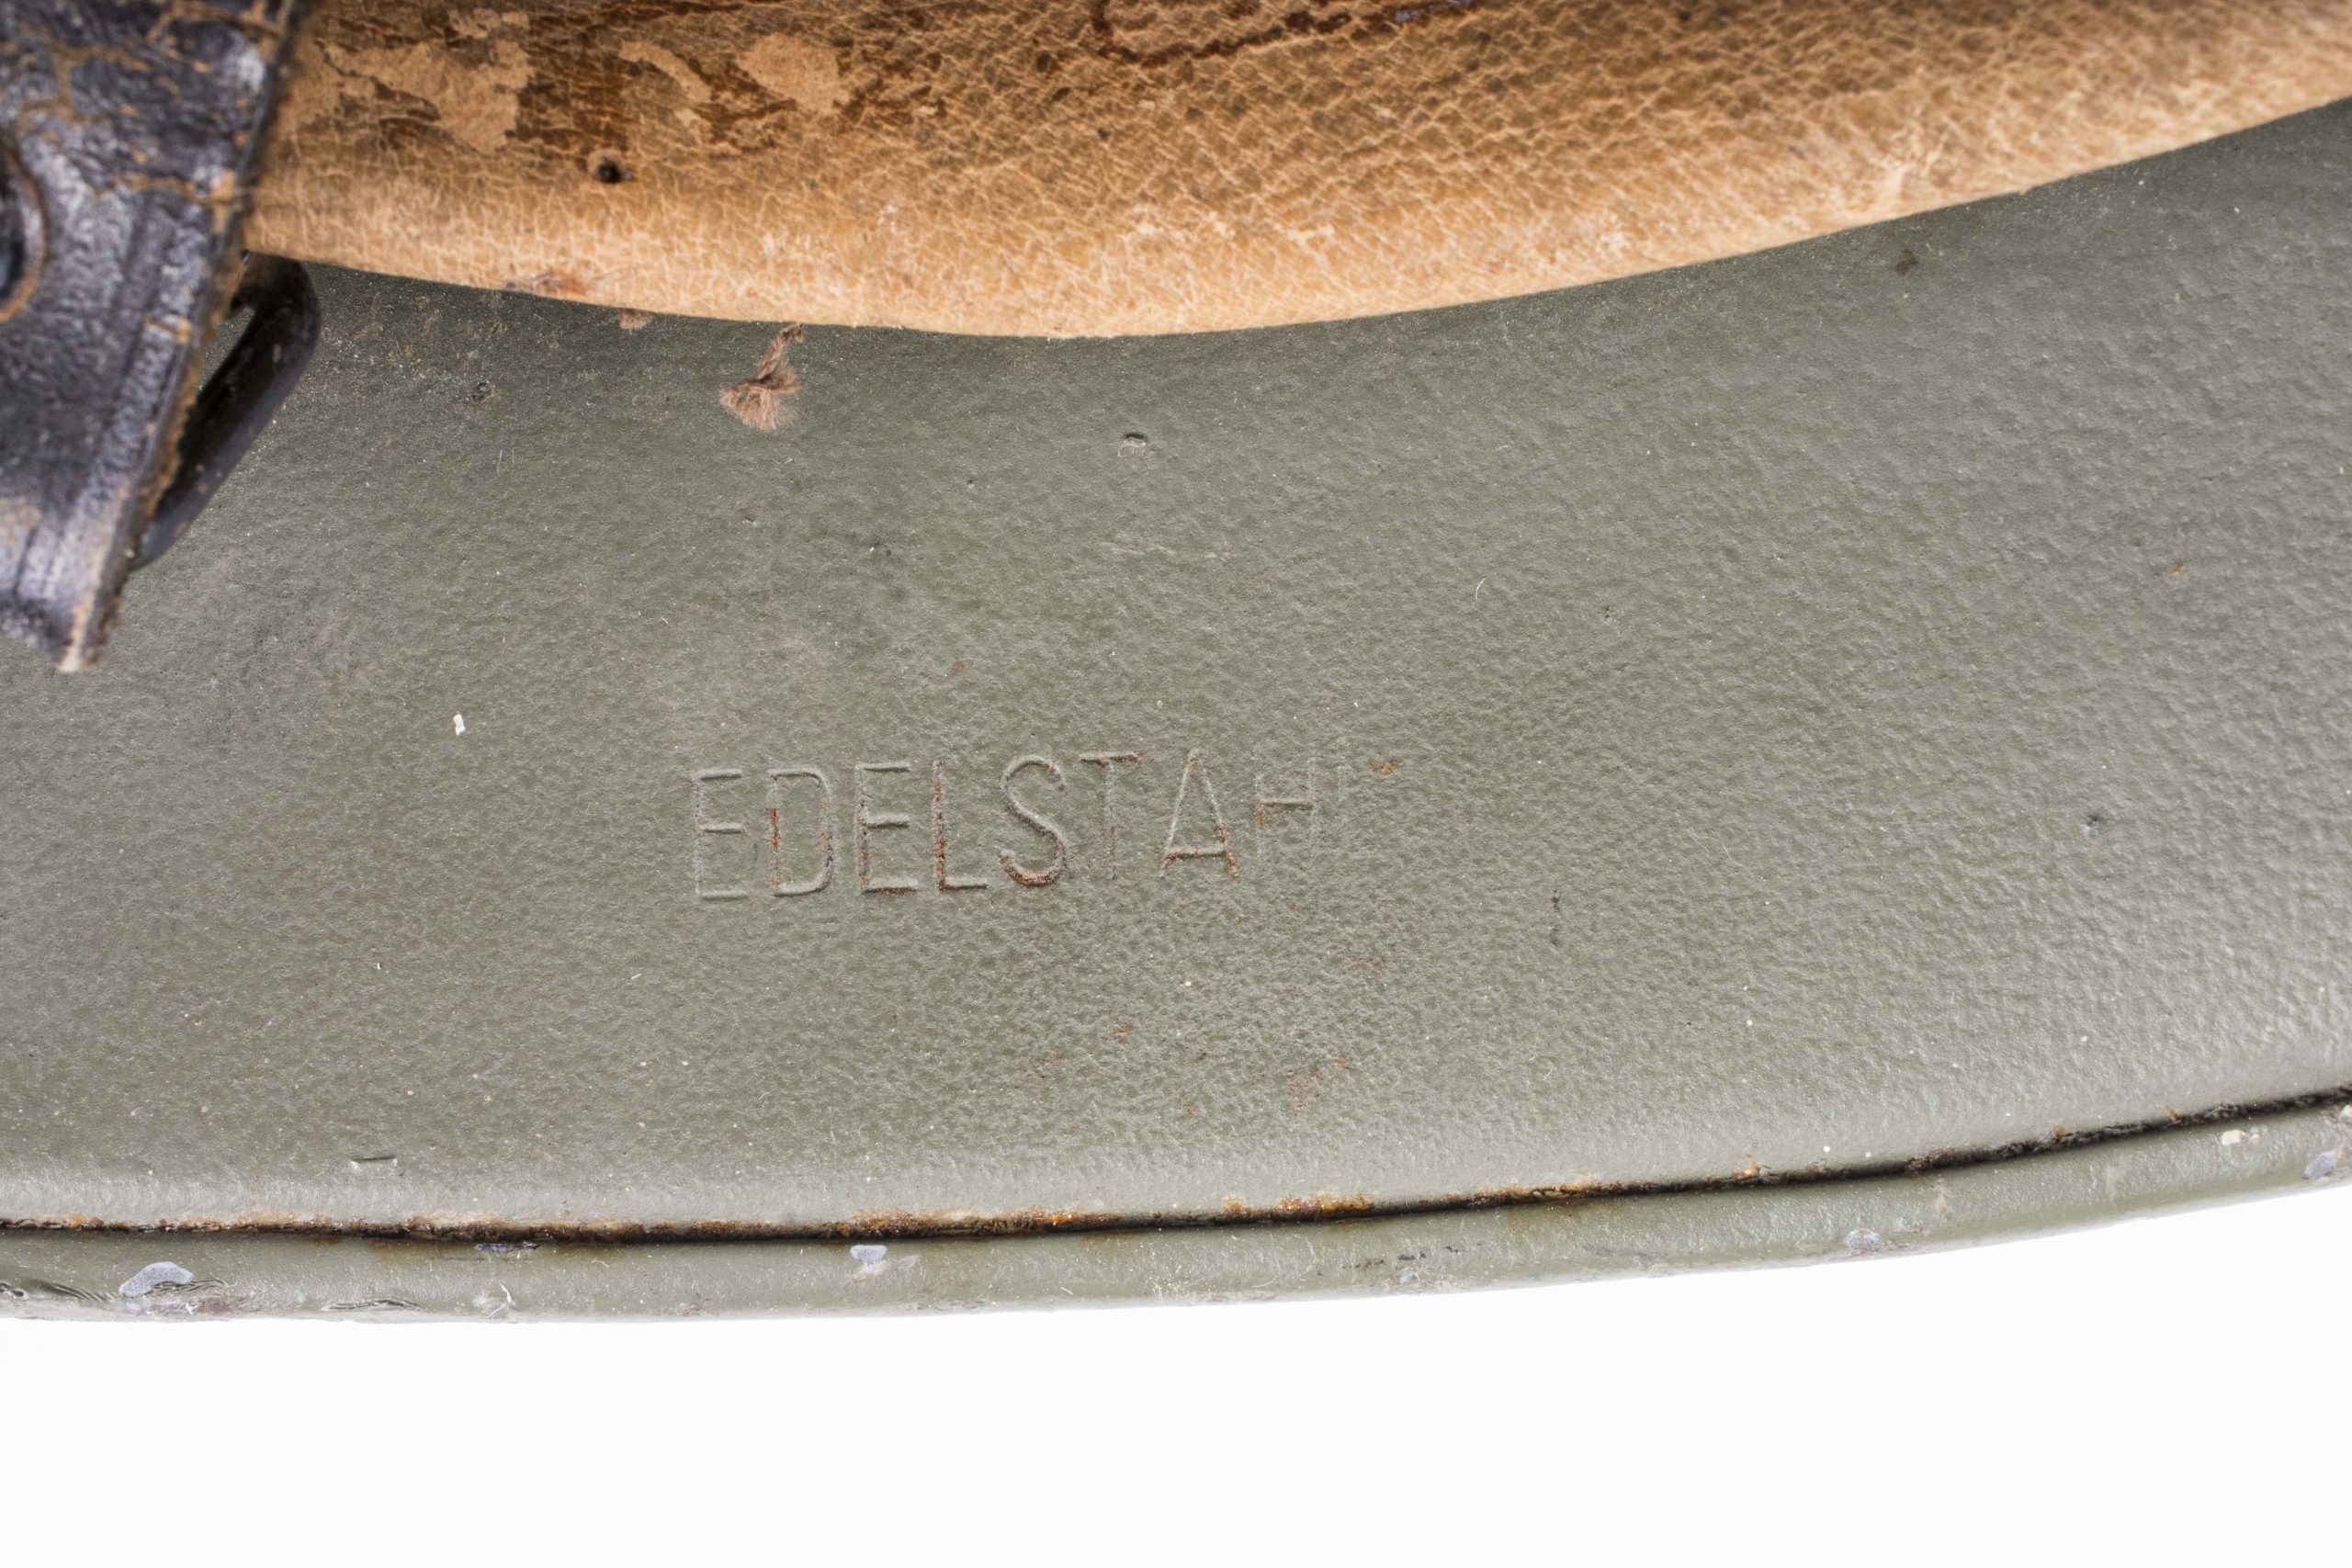 Early Feldgrau Edelstahl helmet – fjm44